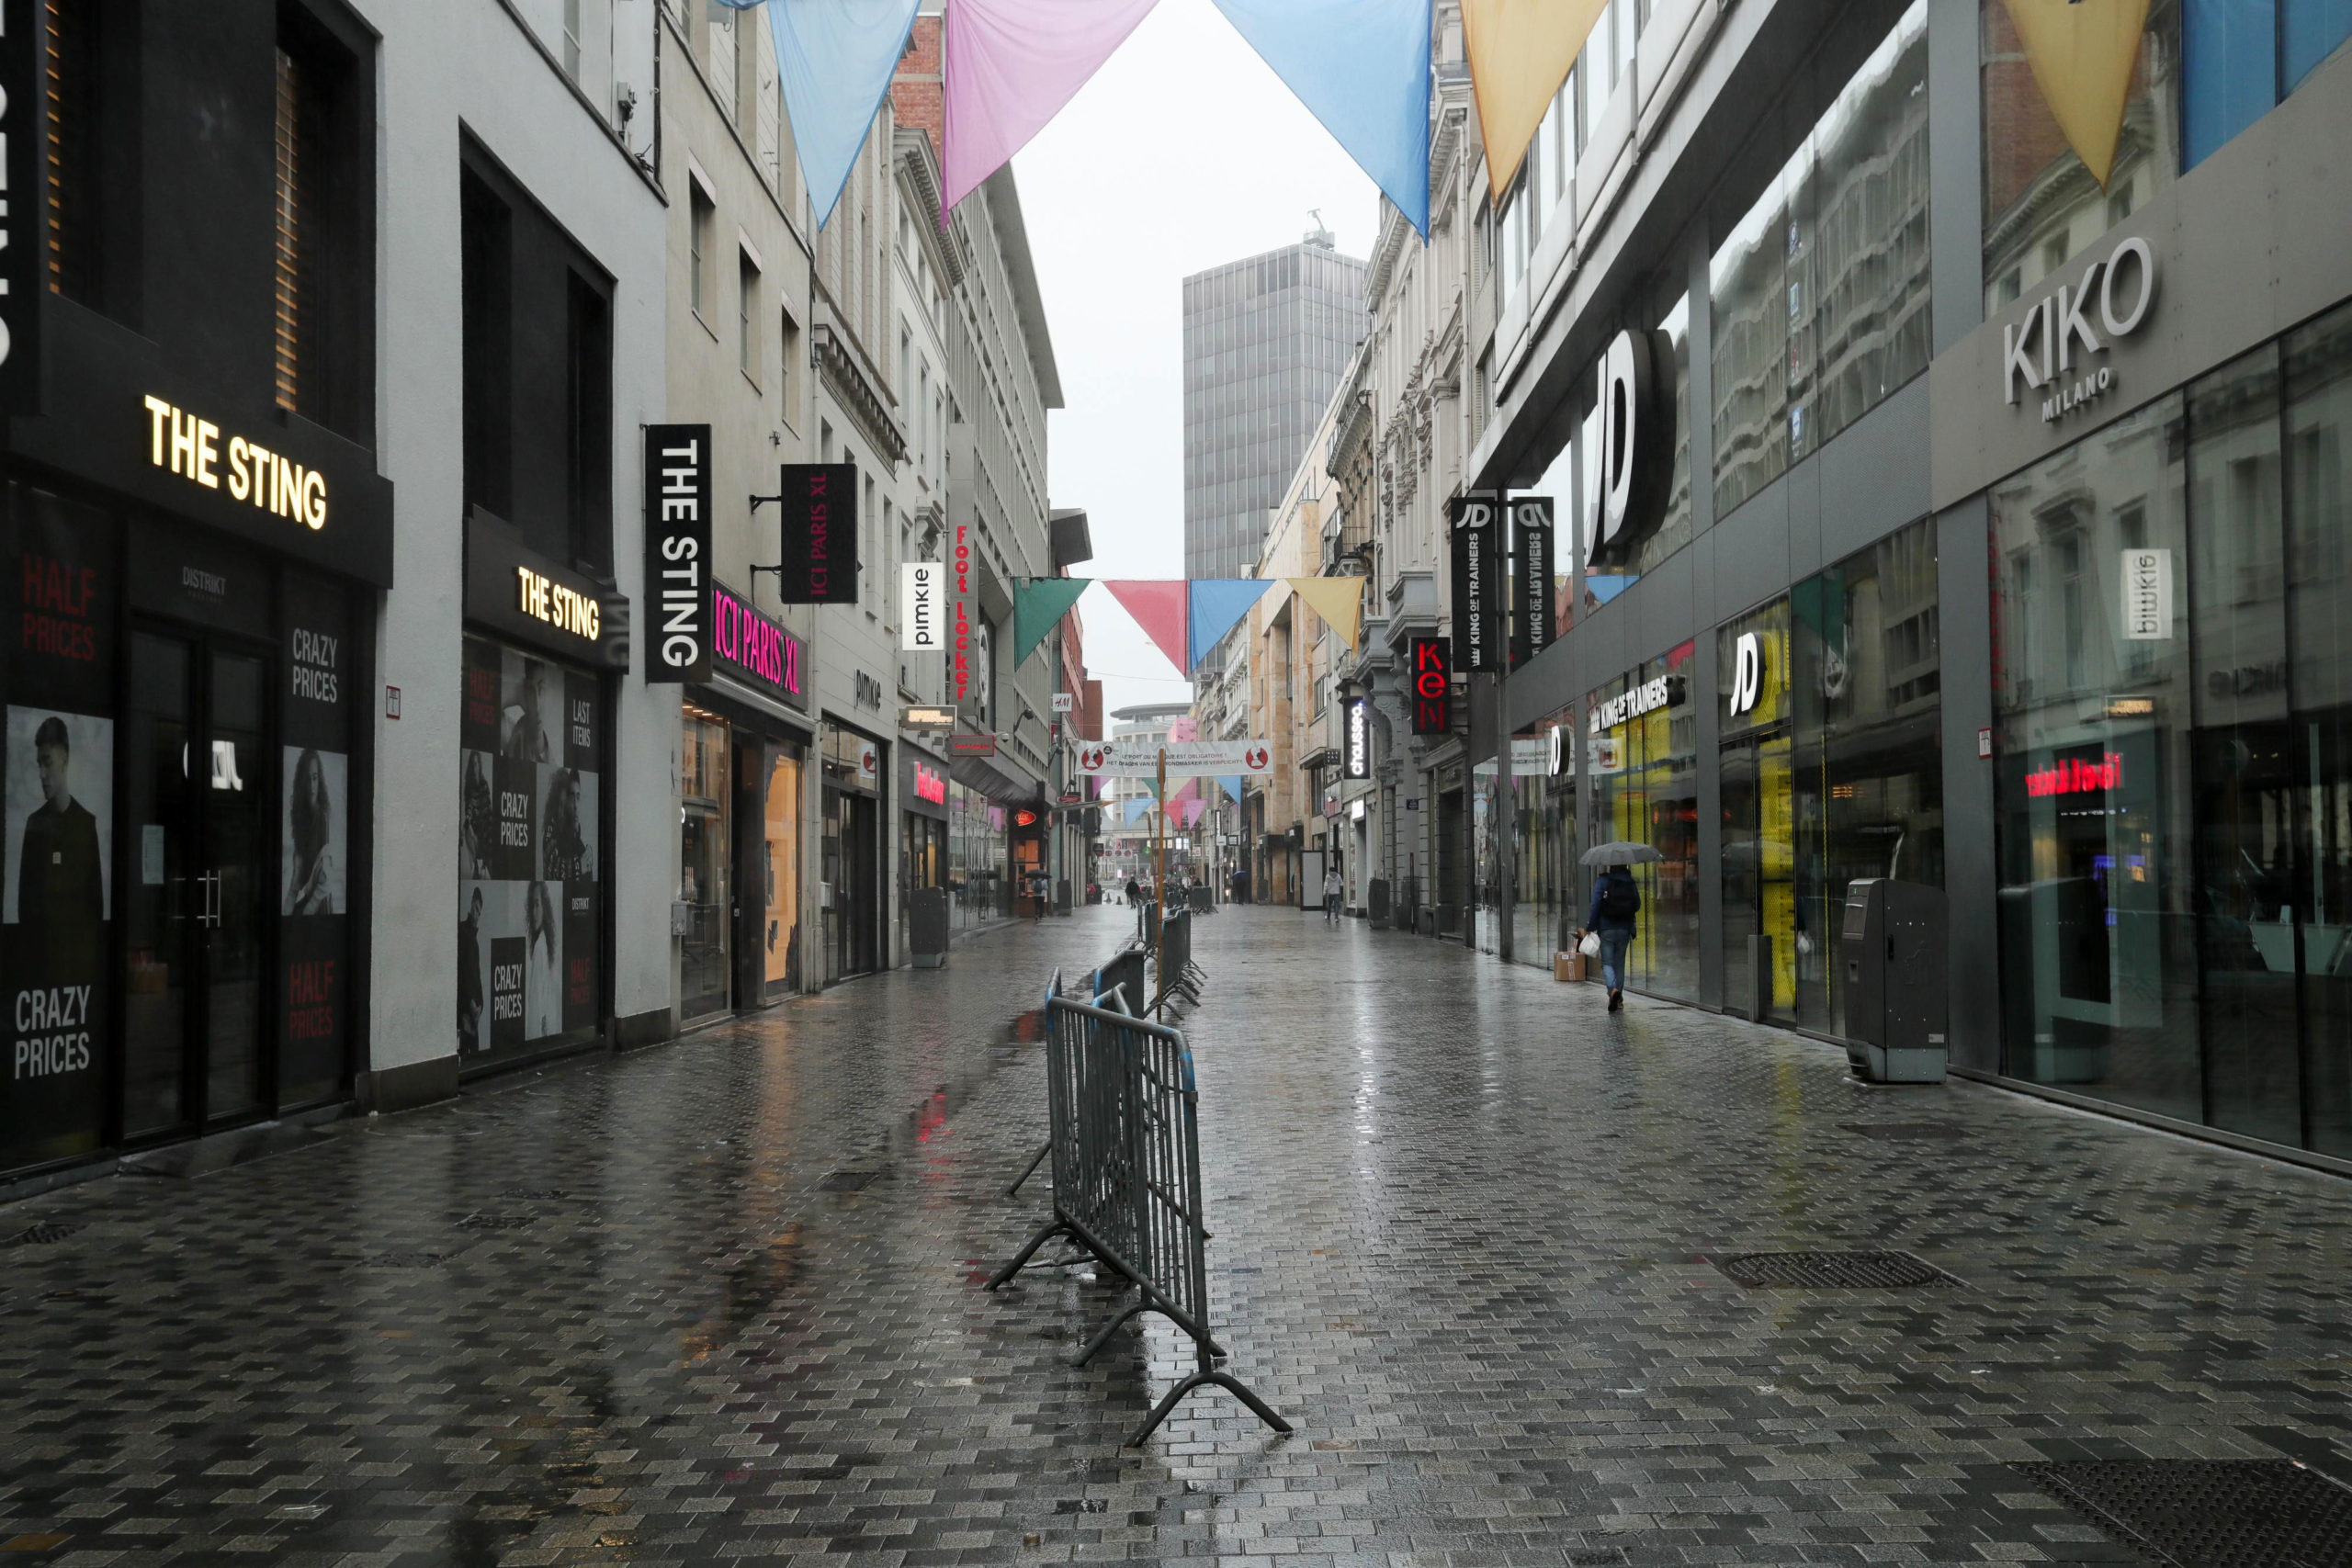 Belgium risks becoming “an island of bankrupt shops”